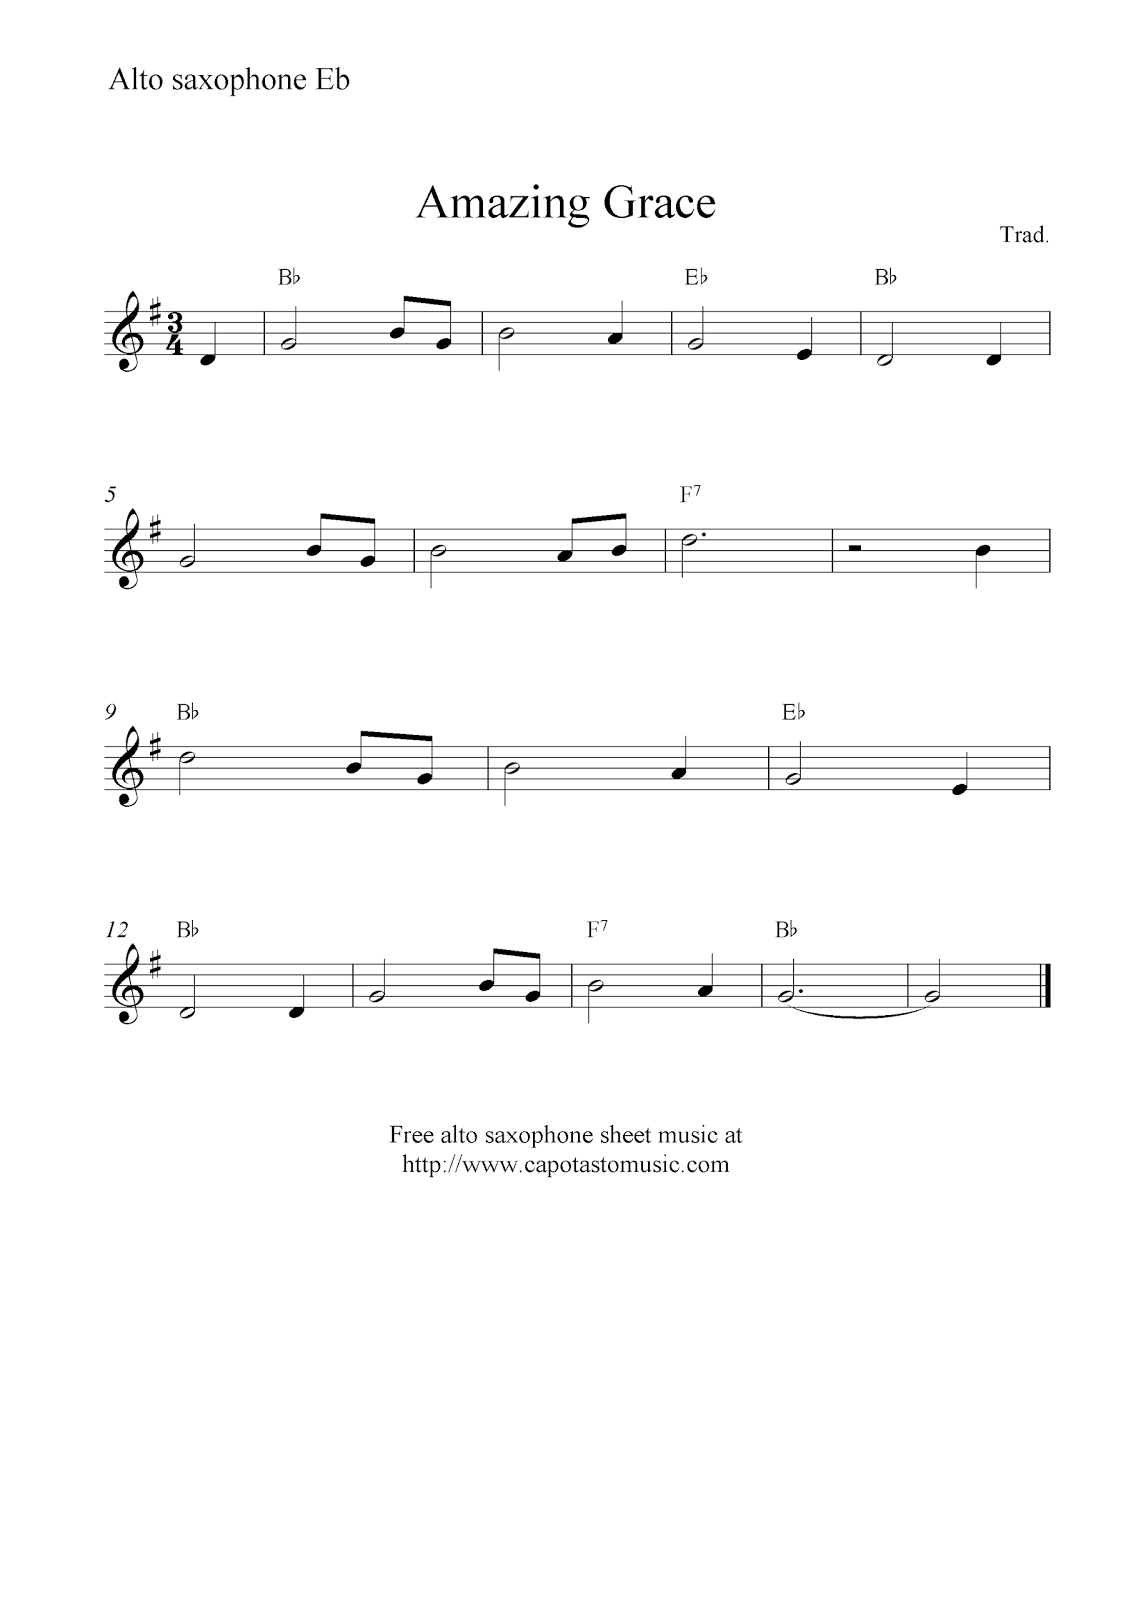 amazing-grace-free-alto-saxophone-sheet-music-notes